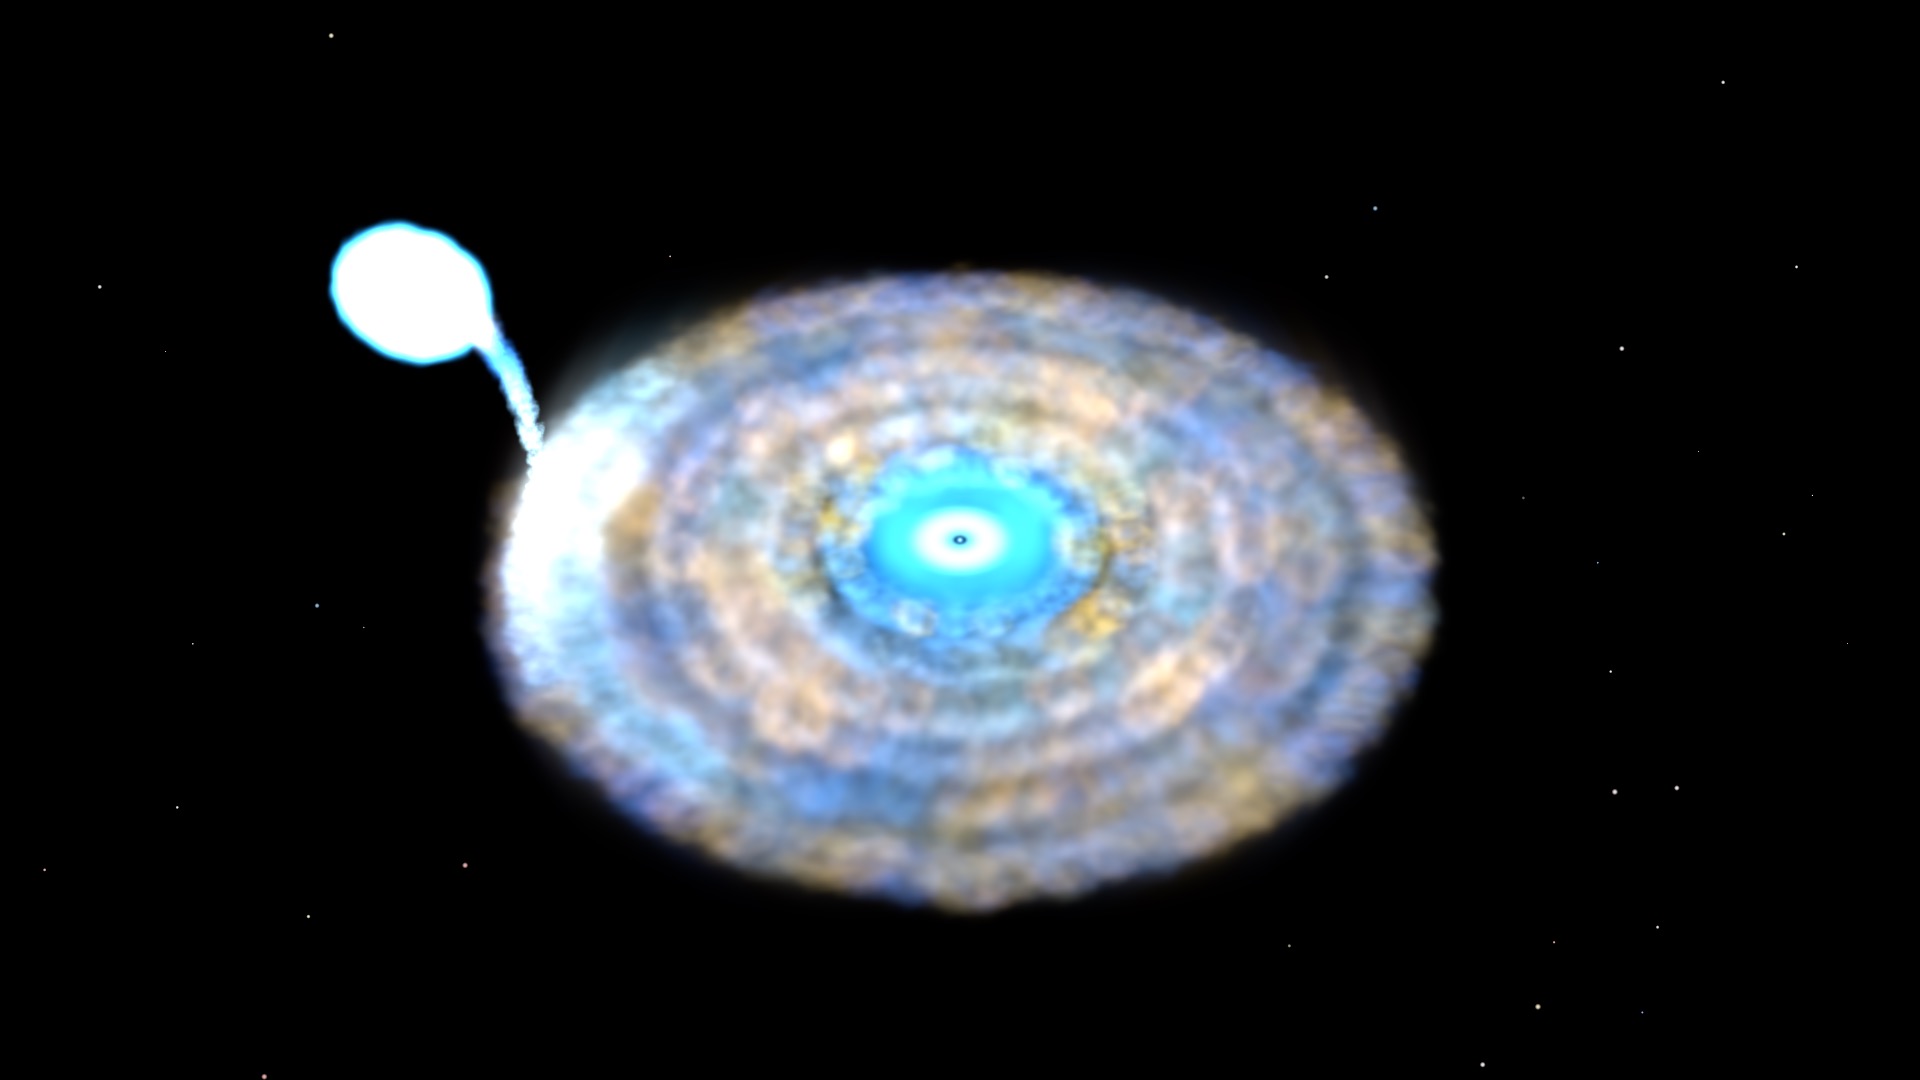 Artist impression of a neutron star system like IGR J17072-6143